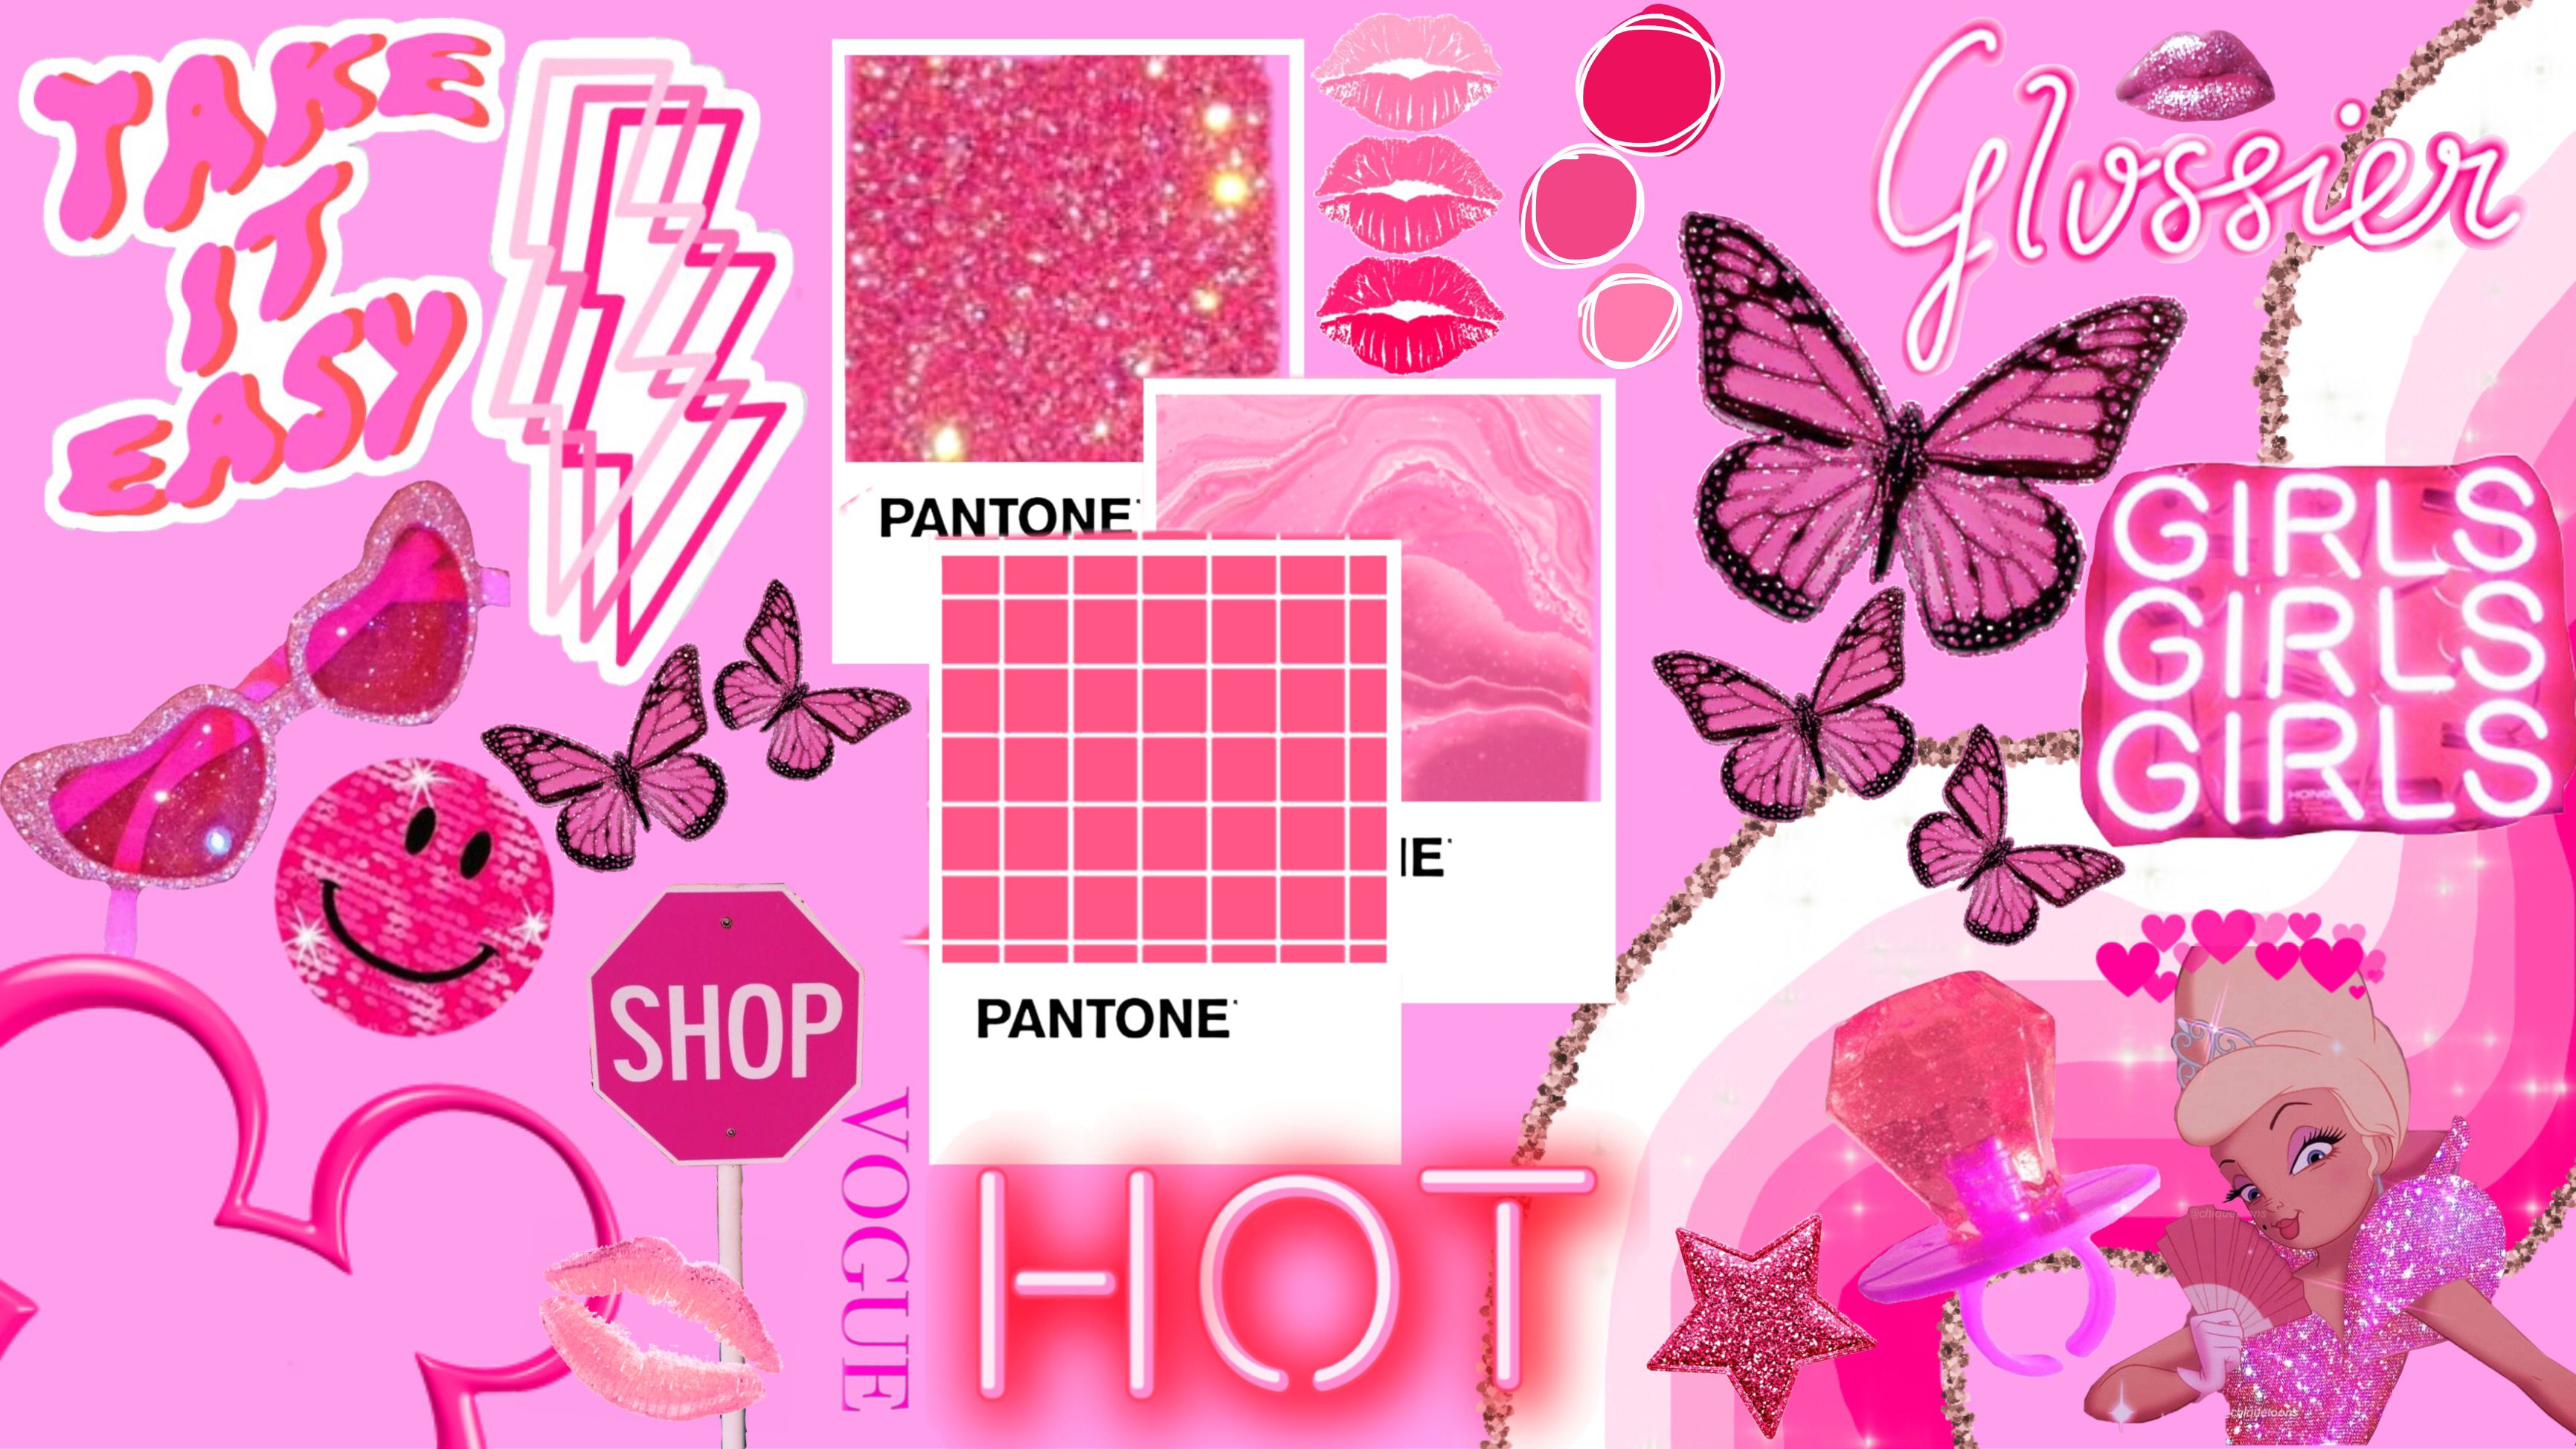 Download Girly Baddie Aesthetic In Pink Wallpaper